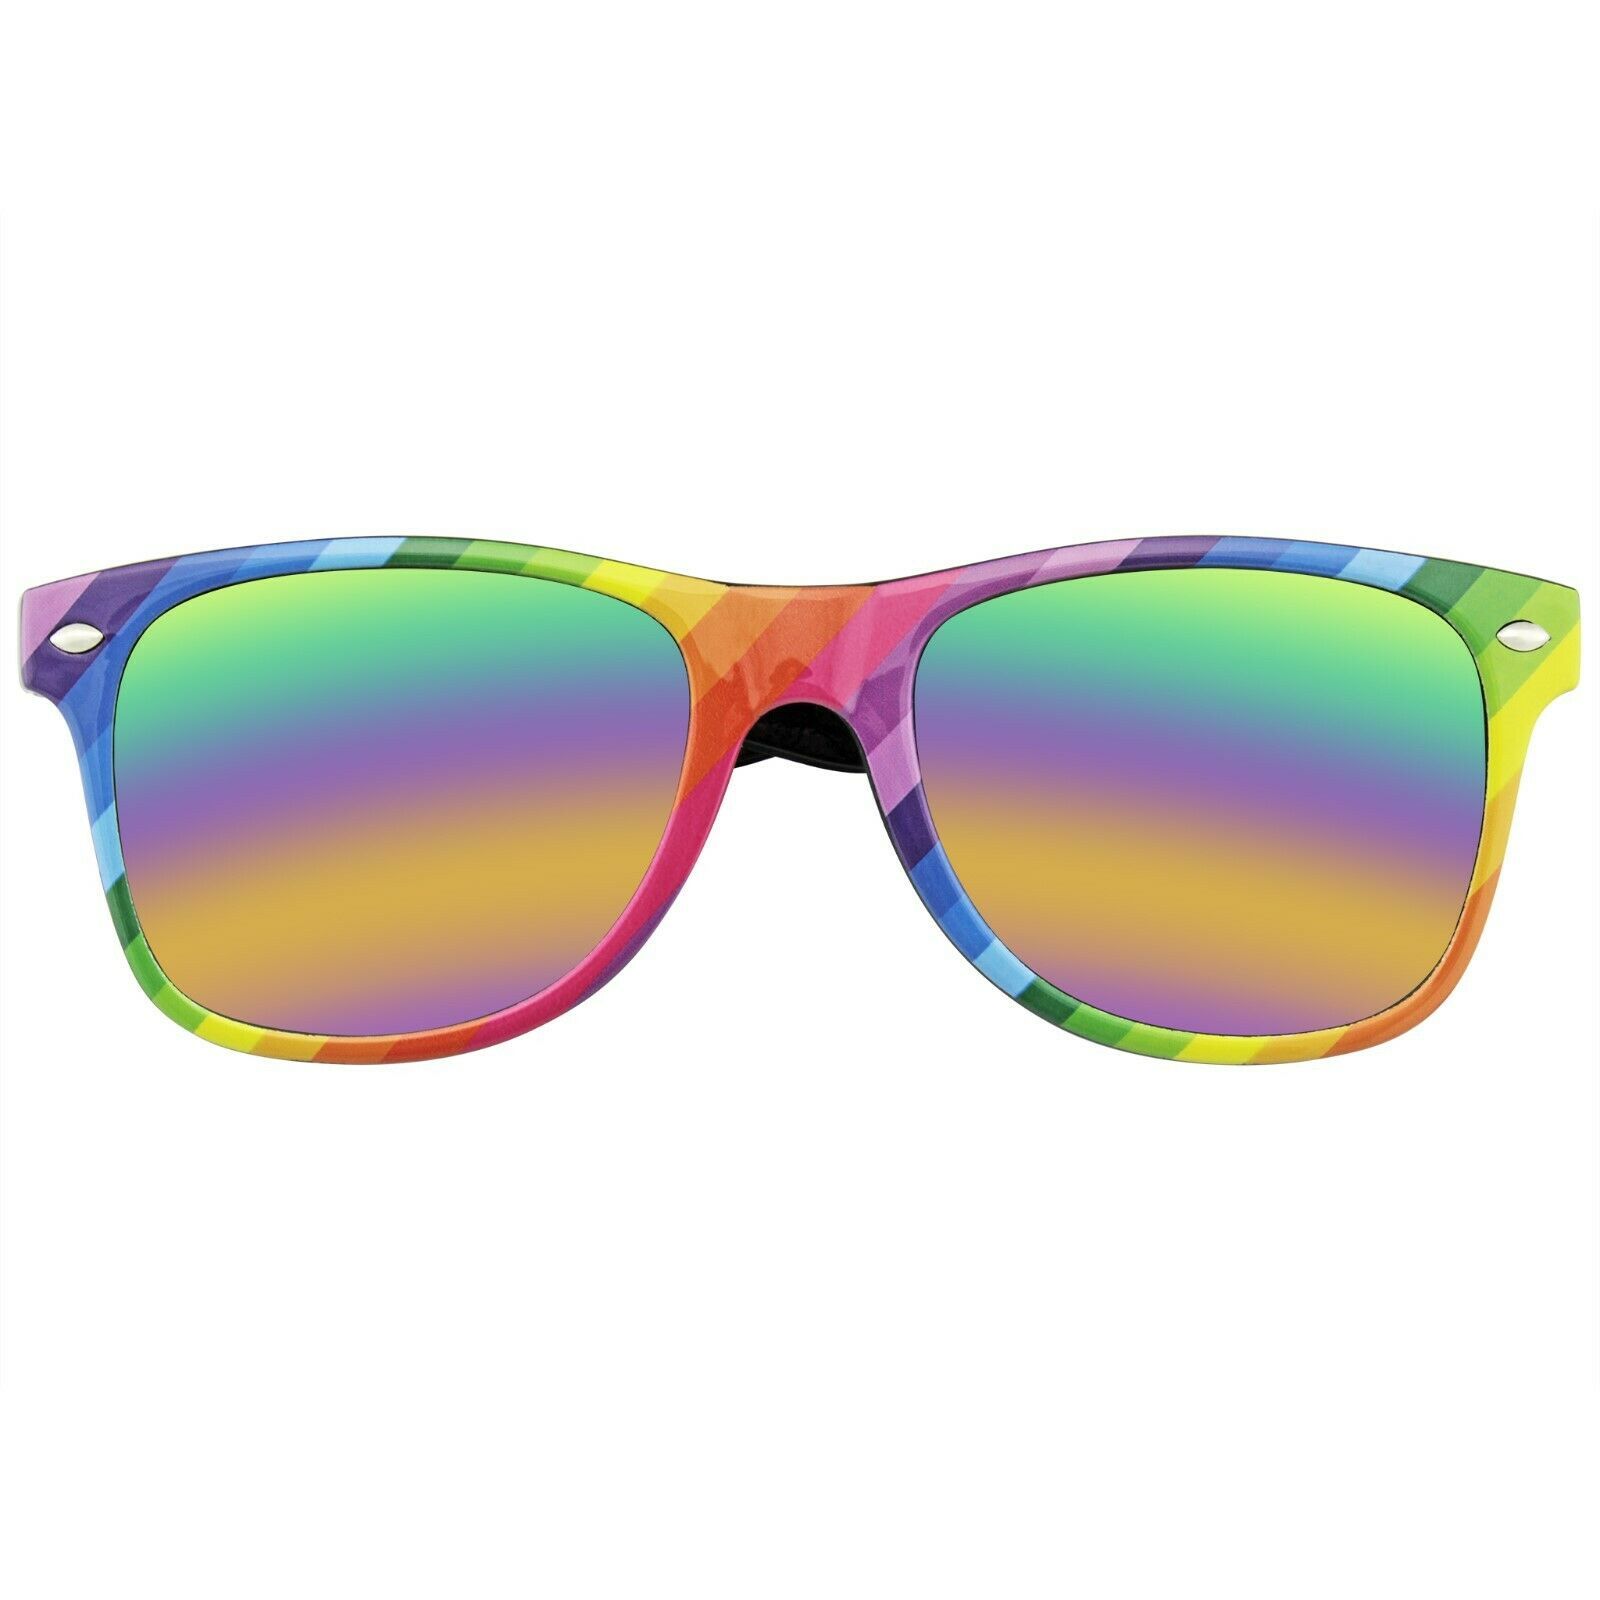 Sunglasses Mens Womens Retro 80s Party Festival Rainbow Mirrored sunglasses CASE